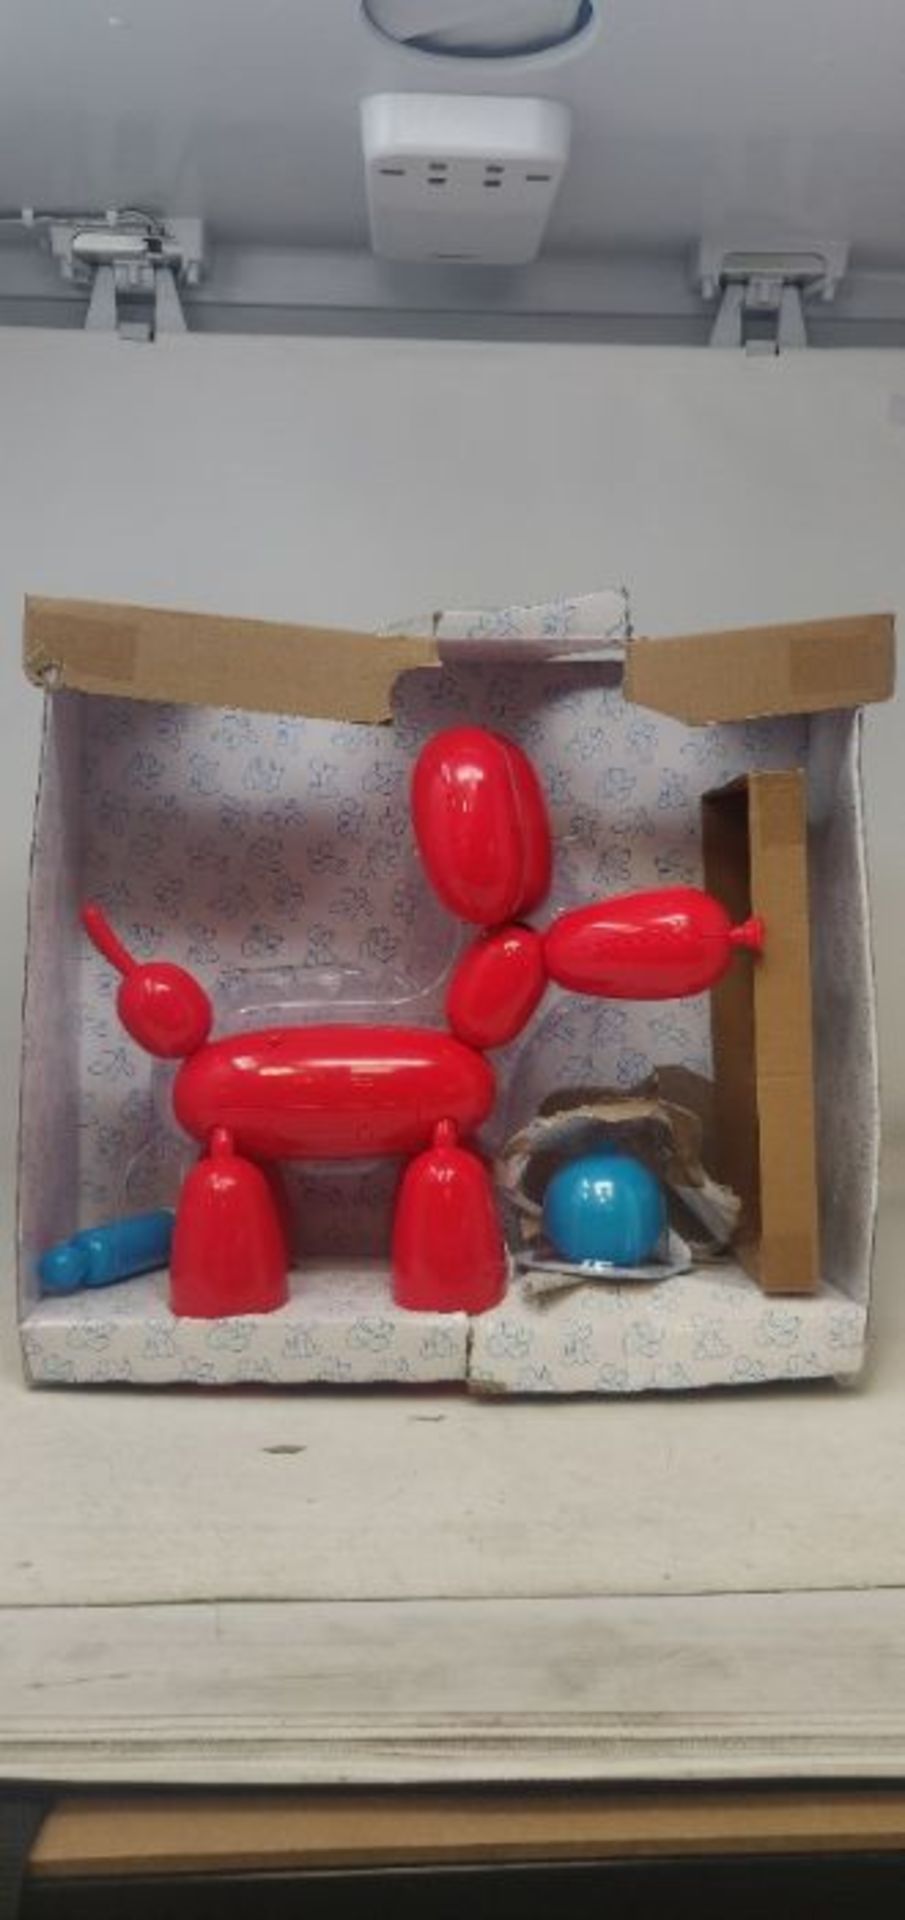 Squeakee 12300 Interactive Balloon Dog - Image 6 of 6